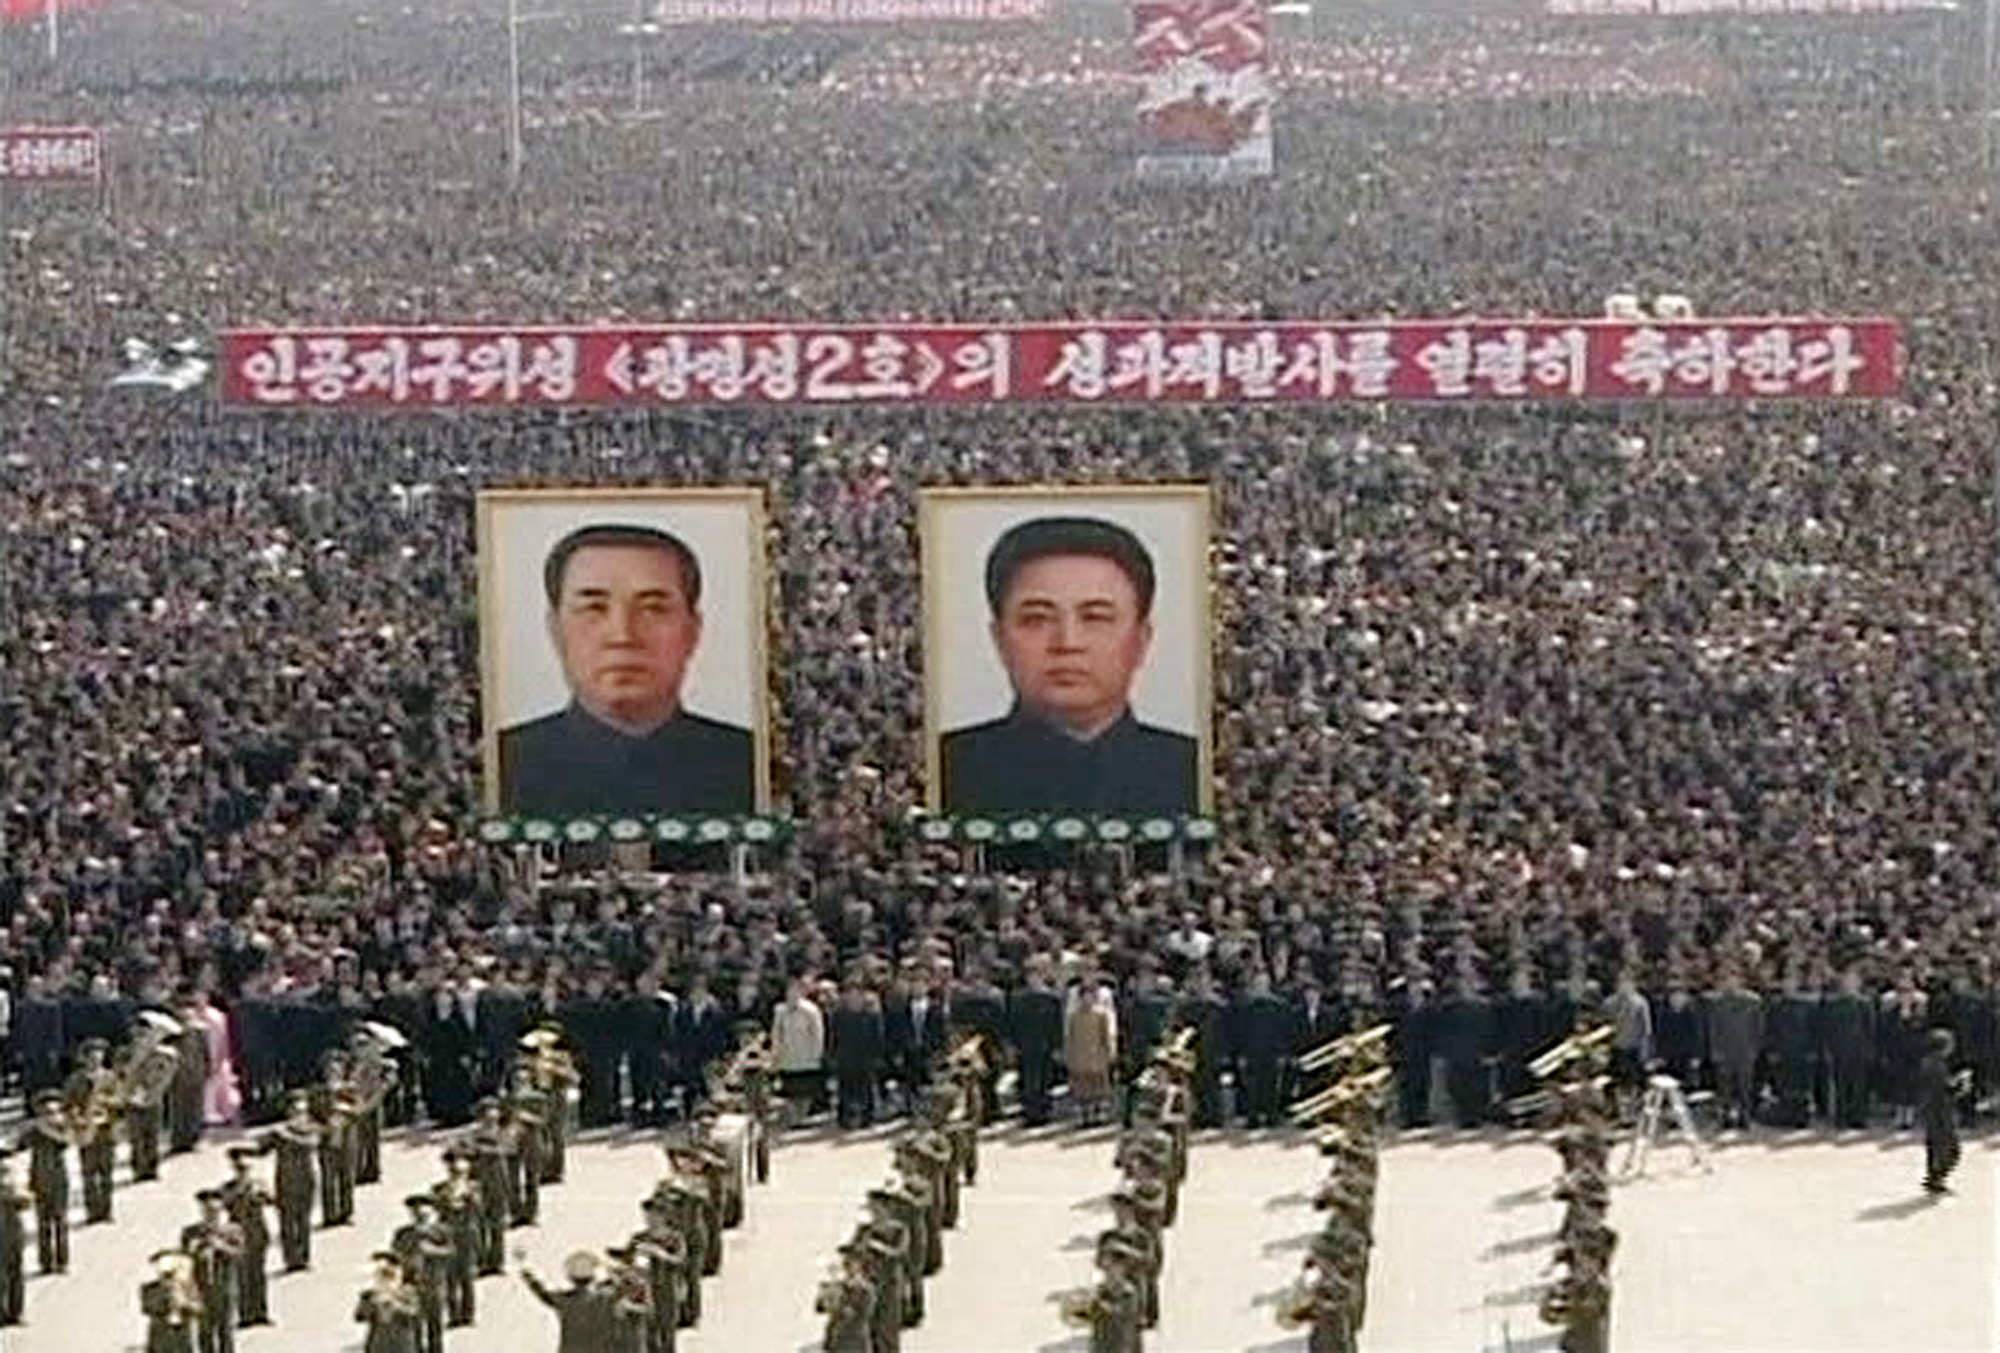 Möte, Nordkorea, Son, Får, Kim Jong-Un, Kommunistparti, Ledare, Kim il-Sung